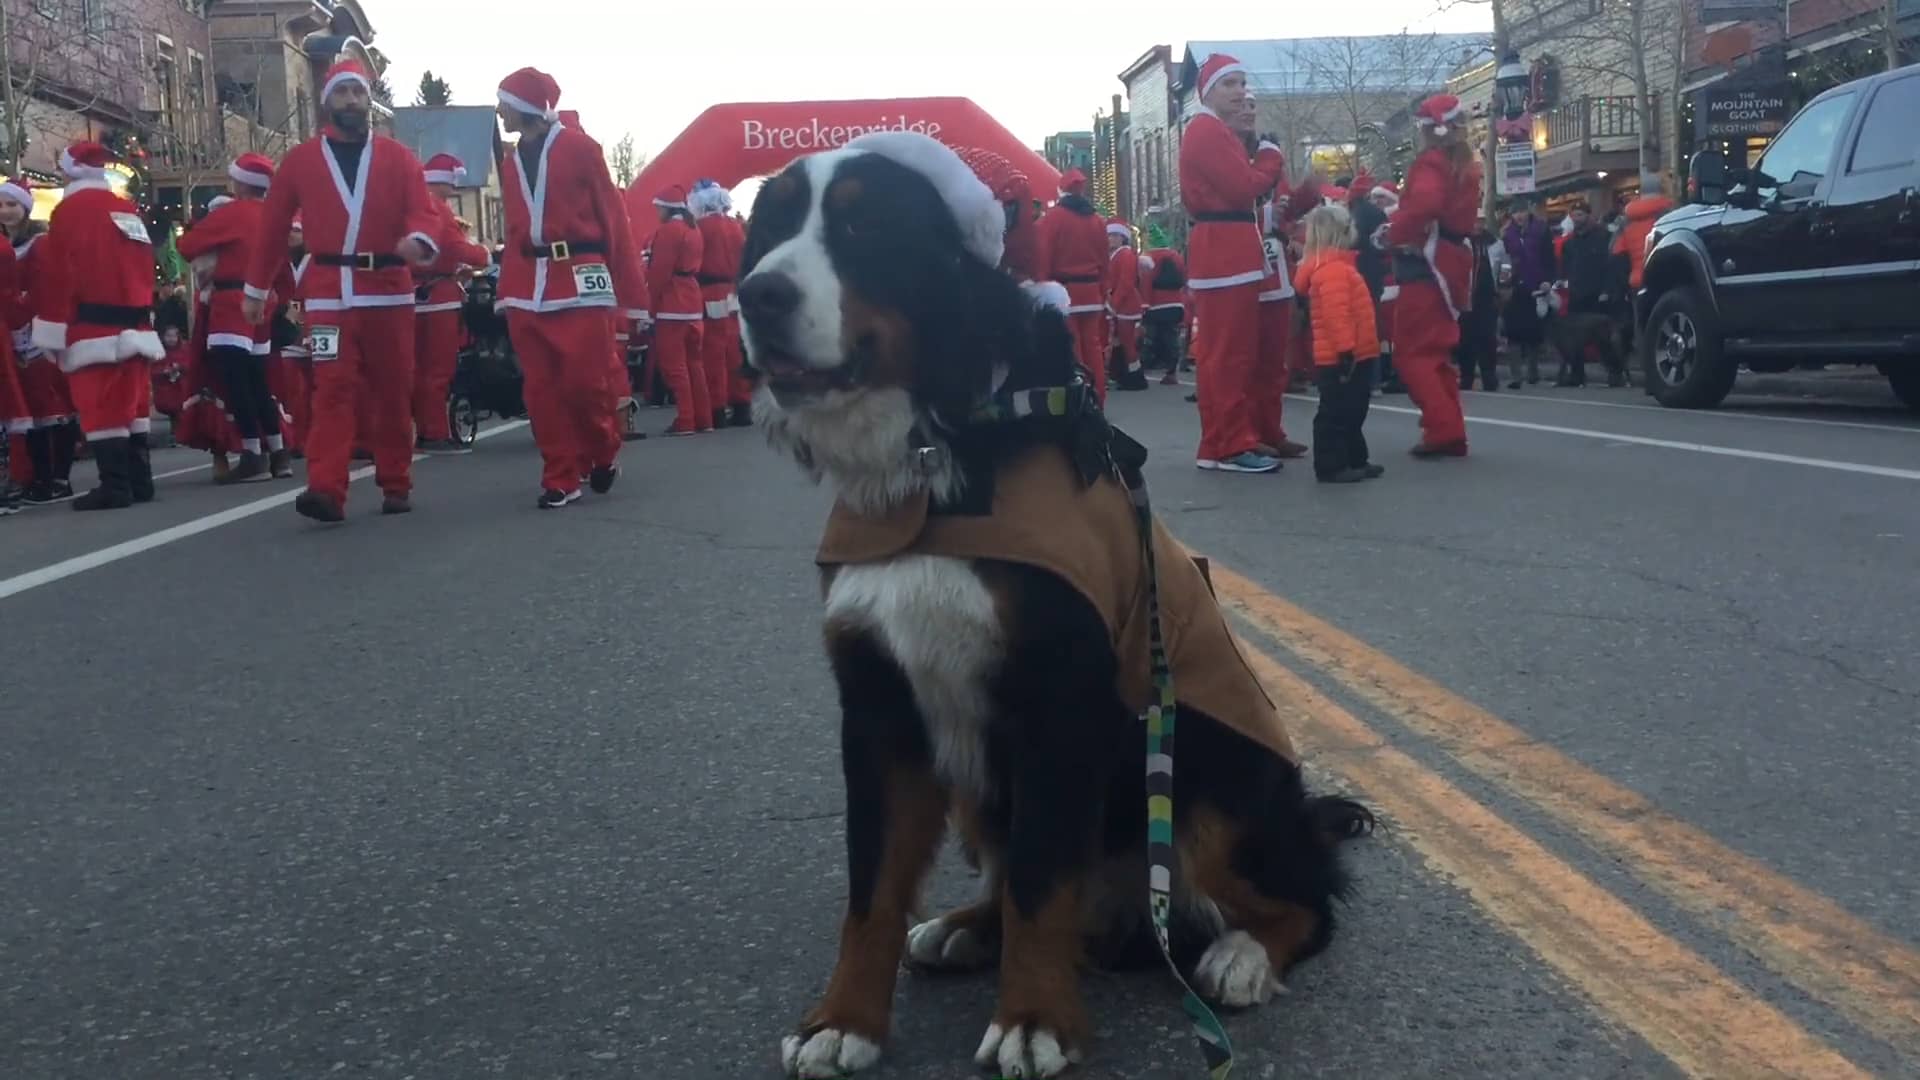 Breckenridge Bernese Mountain Dog Parade on Vimeo